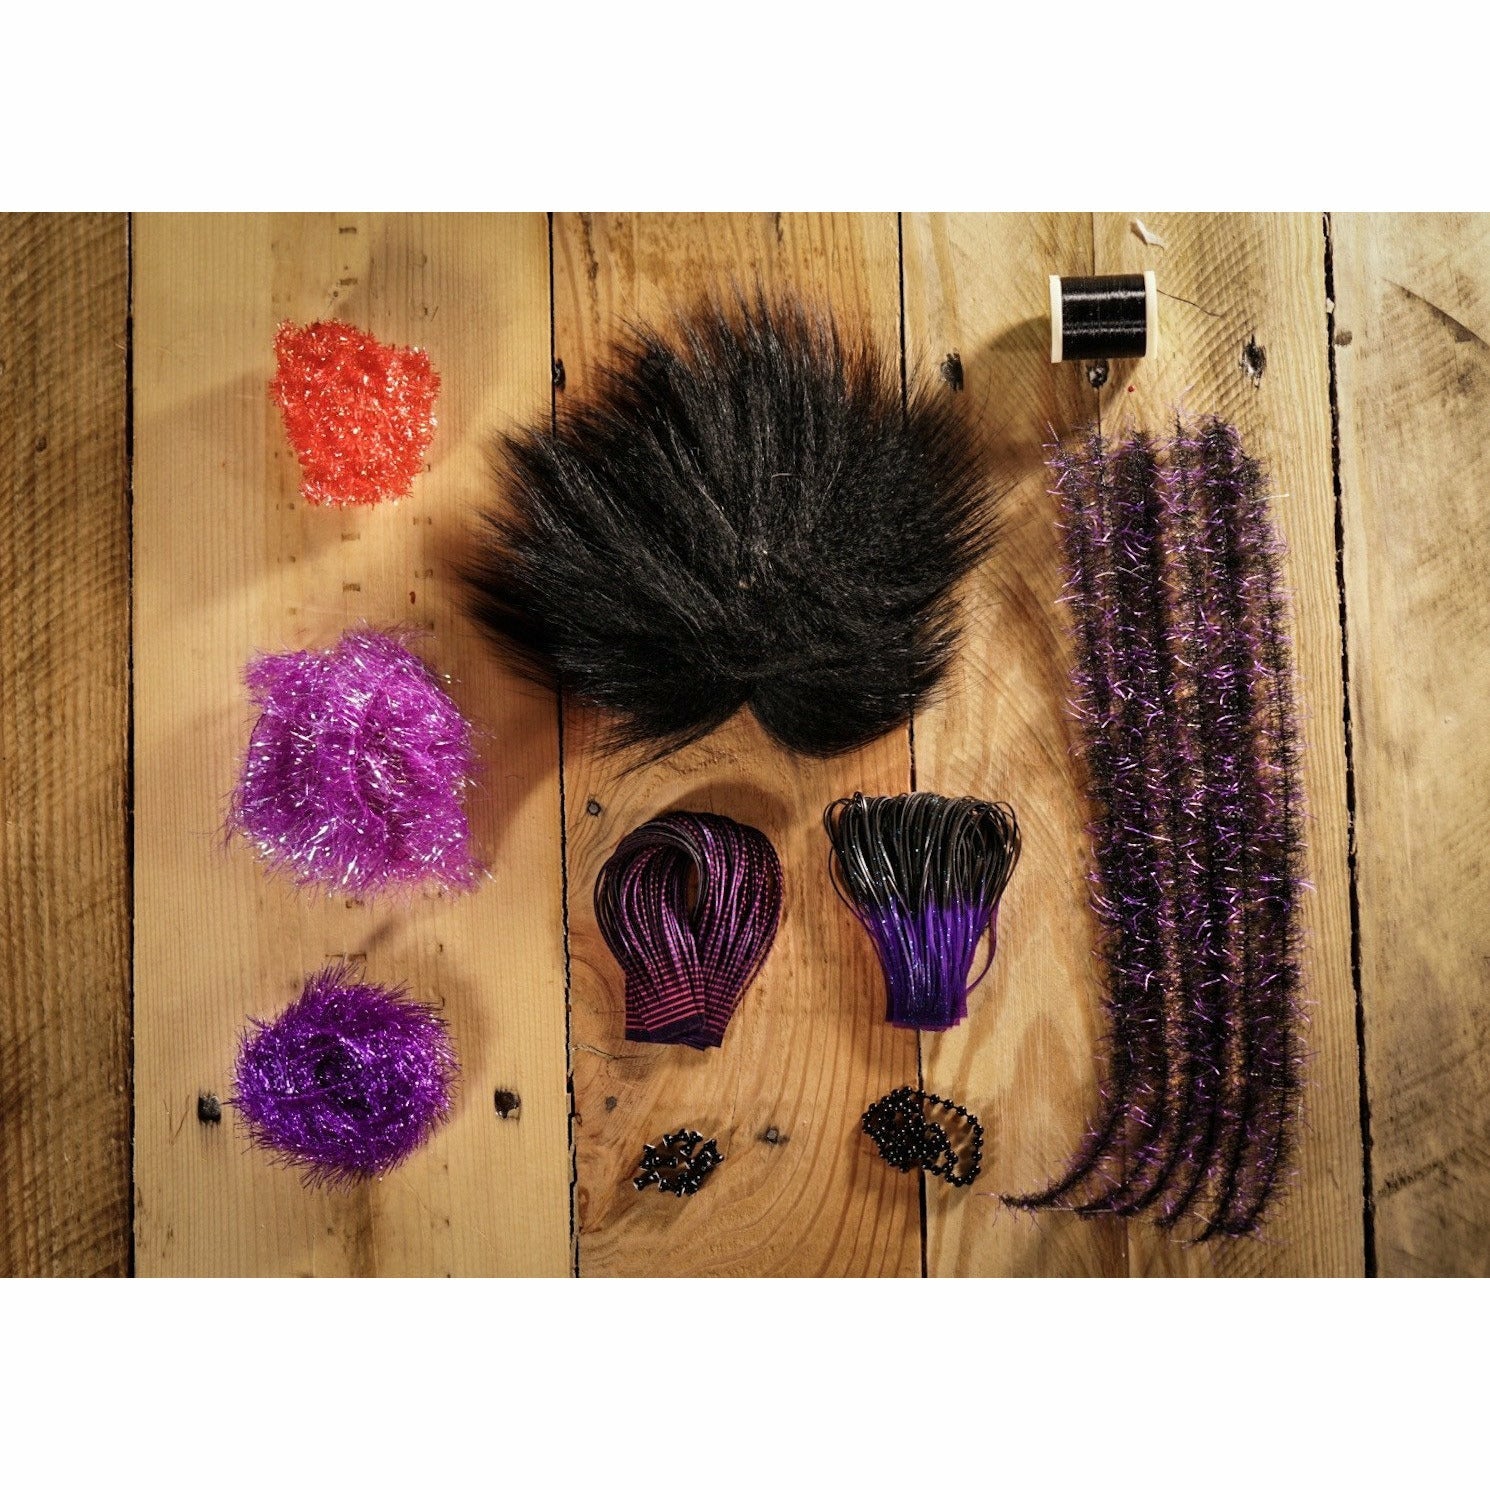 Legtastic Critter DIY Material Kit - Grape